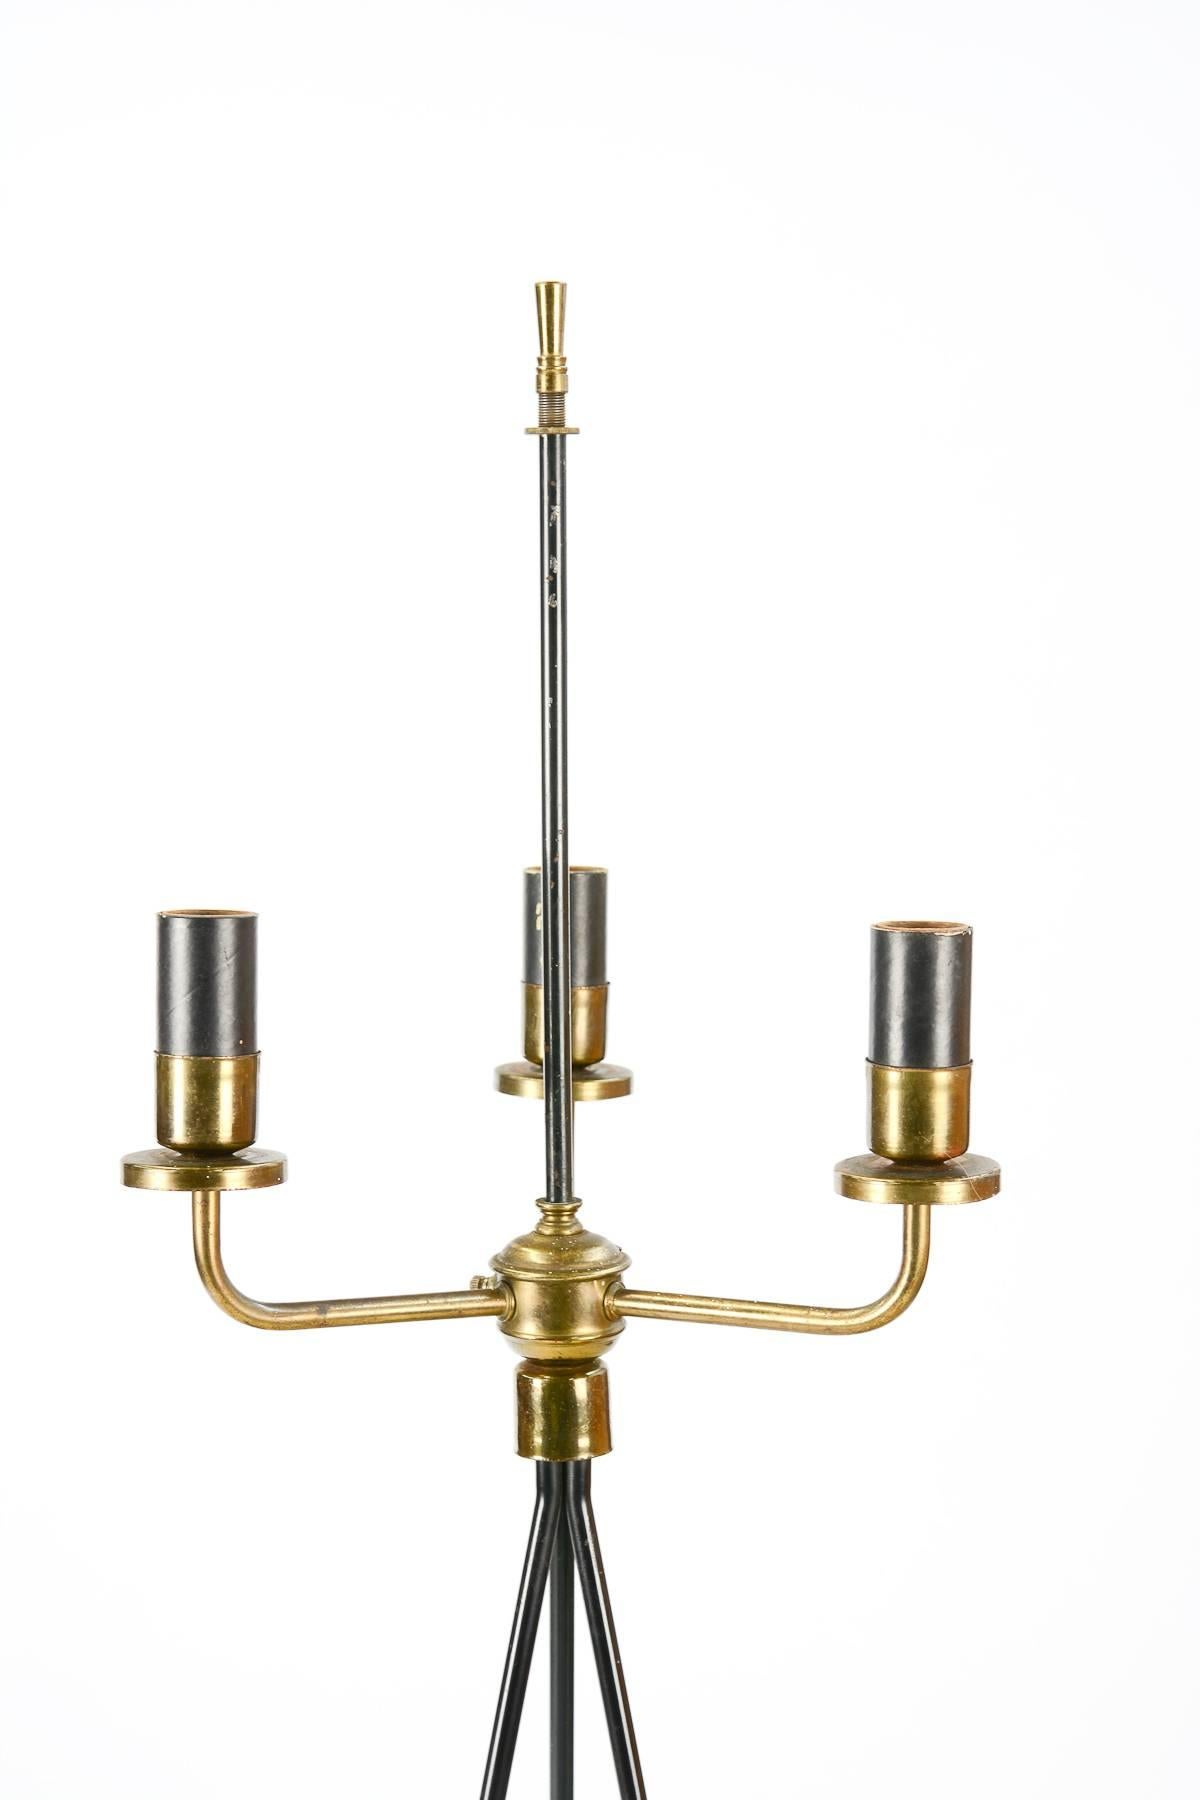 American Rare and Elegant Gerald Thurston Iron Tripod Floor Lamp with Acorn Centerpiece